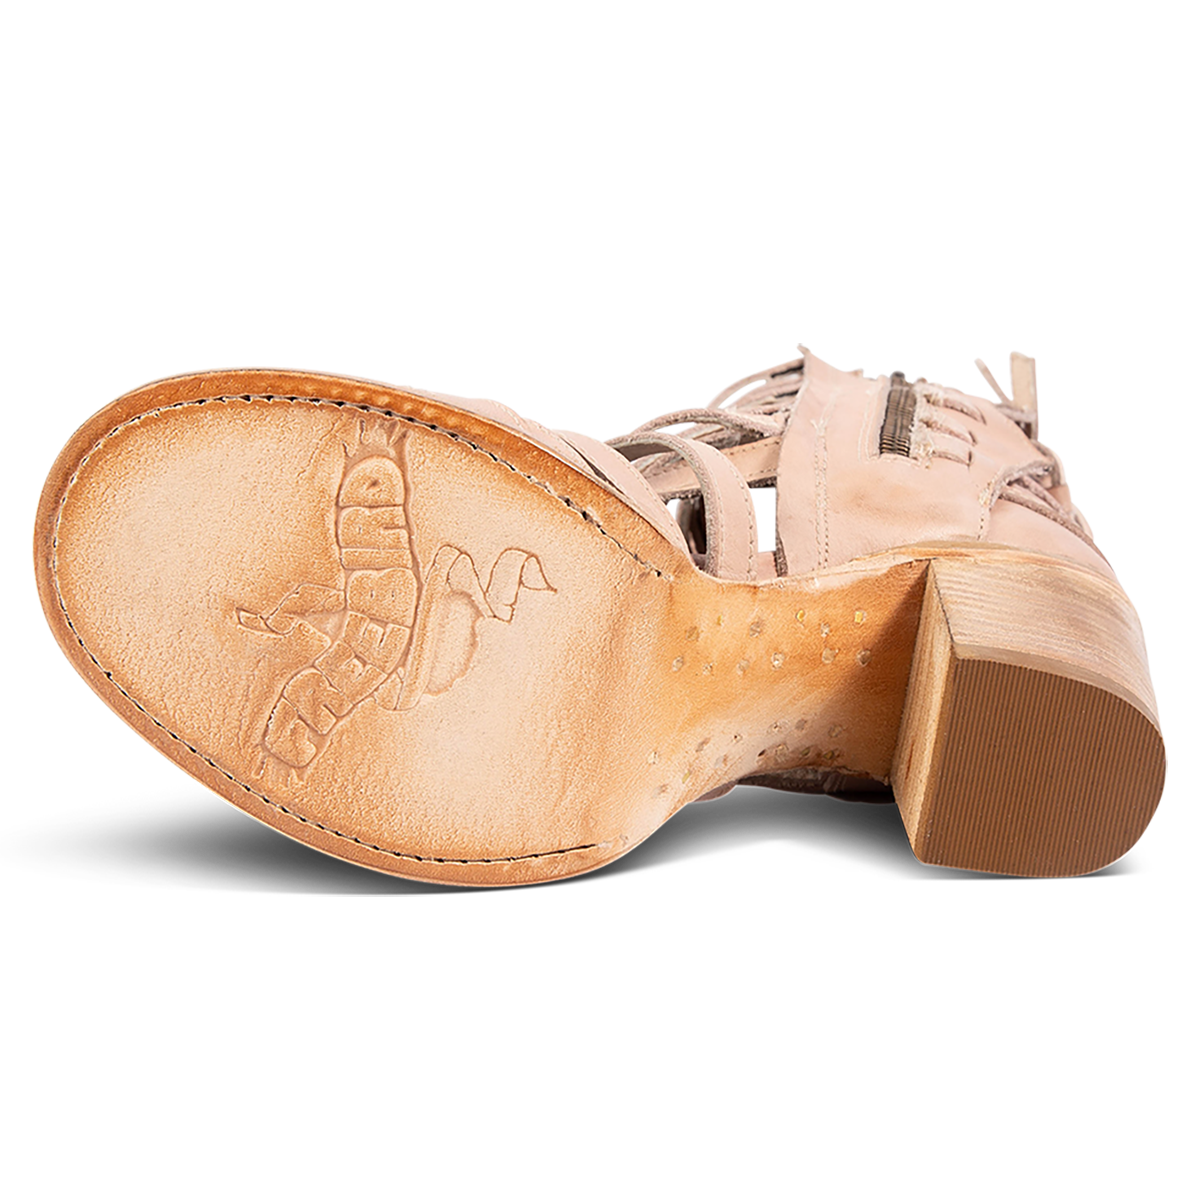 Leather sole imprinted with FREEBIRD on women's Makayla blush leather sandal